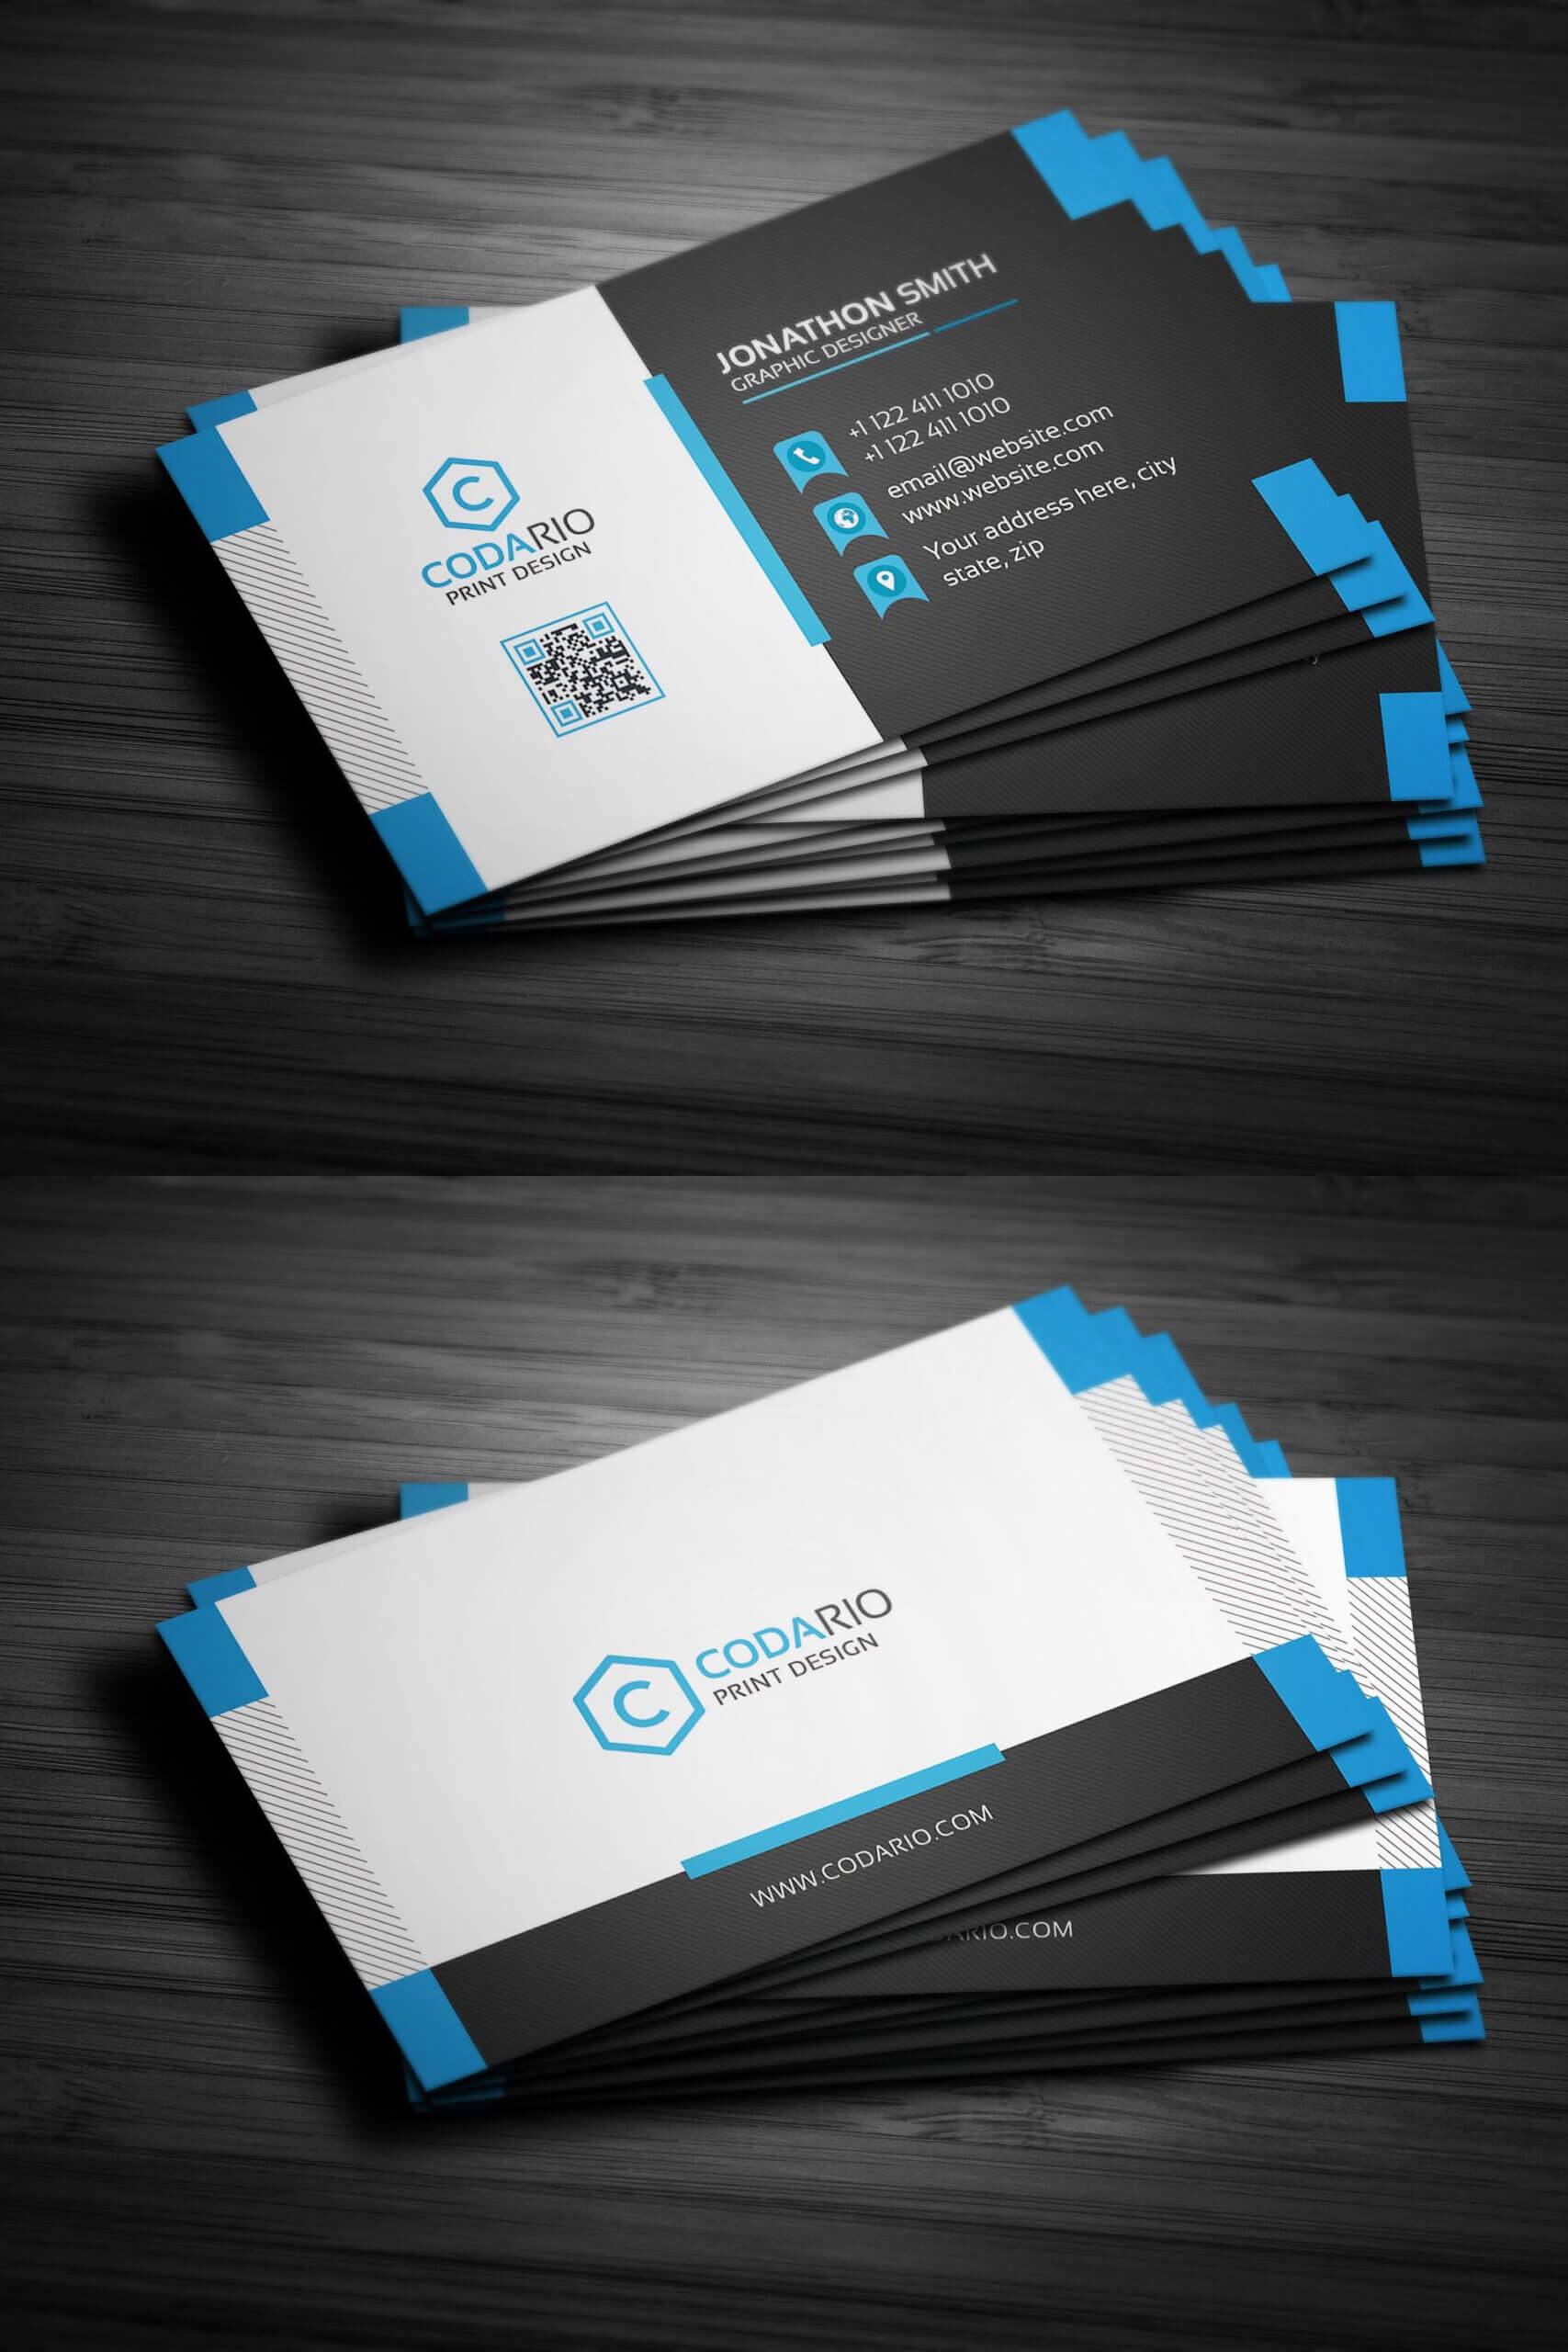 Modern Creative Business Card Template Psd | Create Business With Regard To Creative Business Card Templates Psd